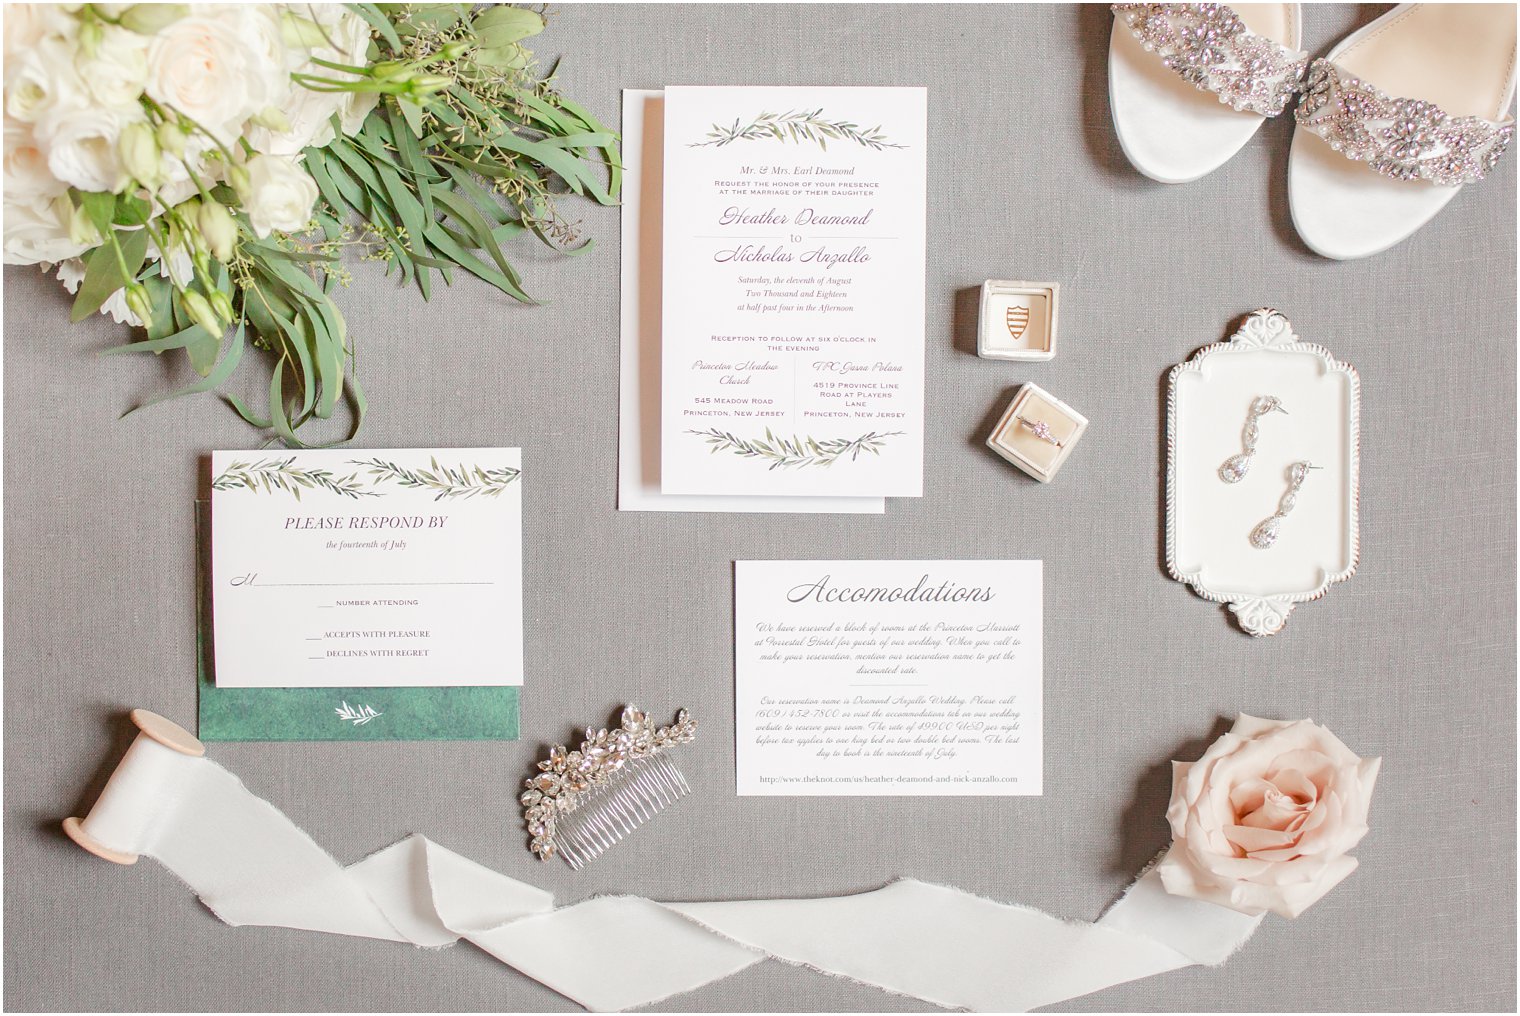 burgundy and ivory wedding invitations by VistaPrint for Jasna Polana wedding